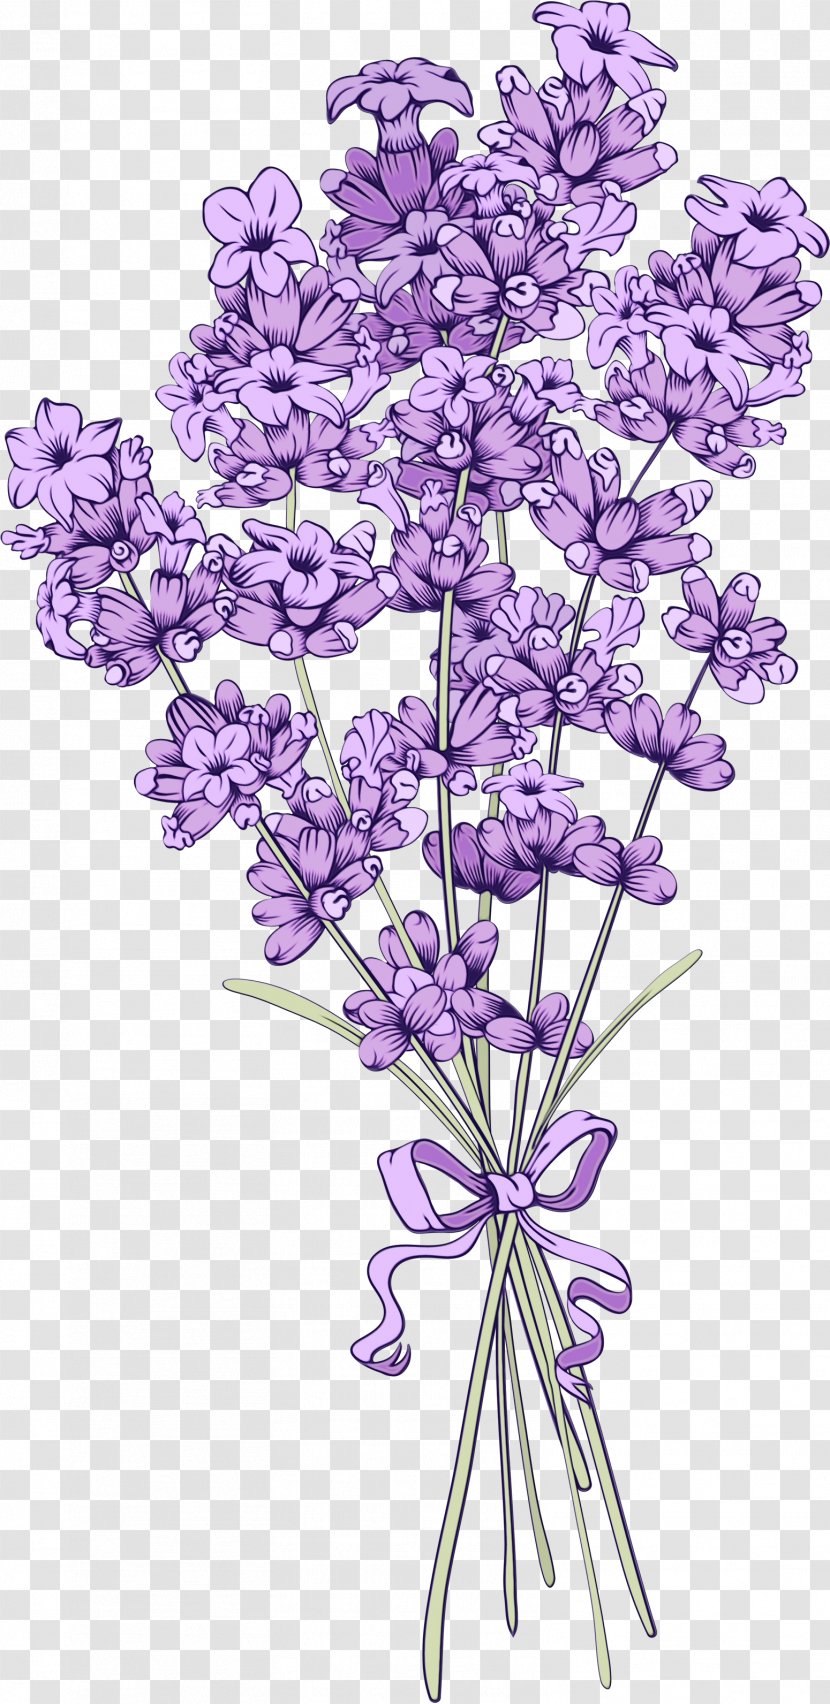 Dandelions Purple Glitter  Free Image On Pixabay Purple Flower Drawing  PngDandelion Png  free transparent png images  pngaaacom